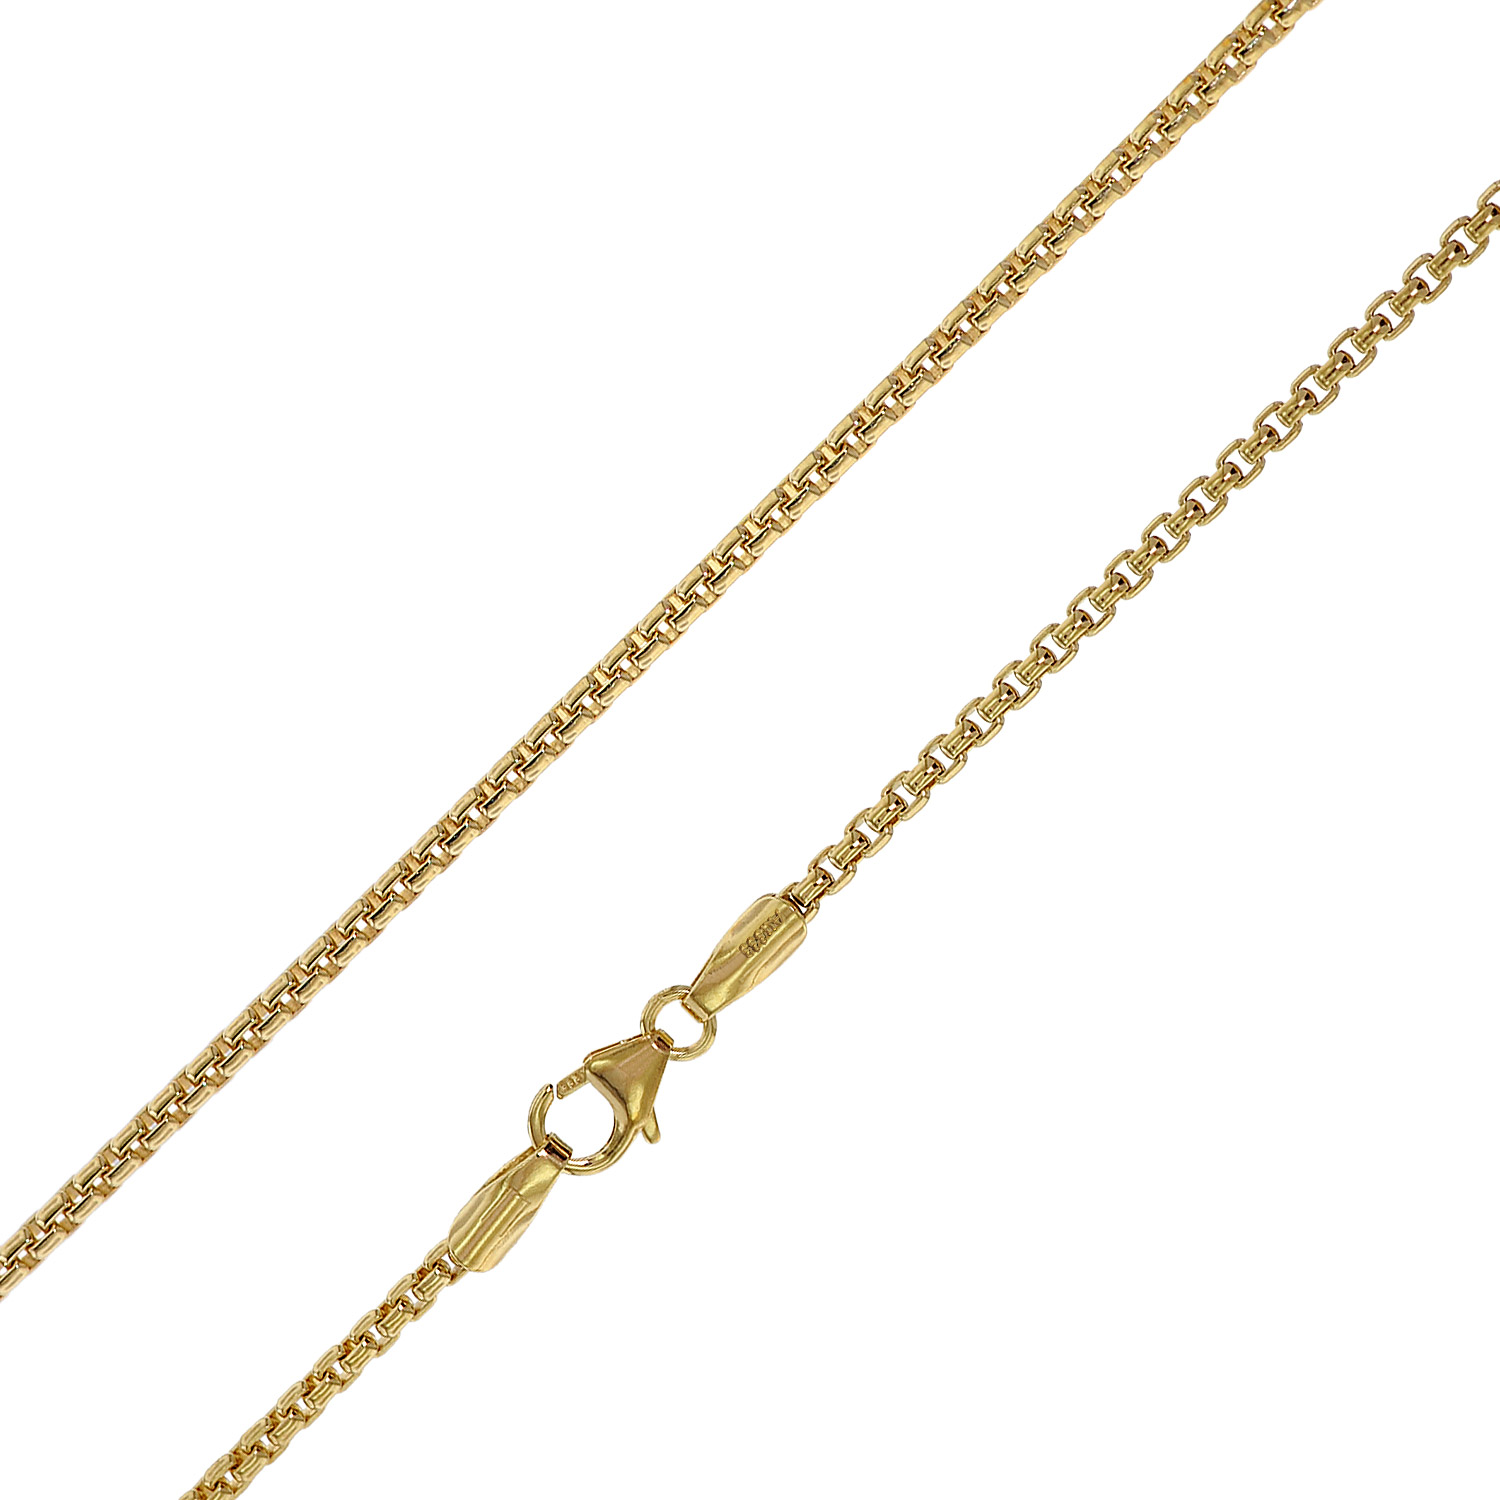 trendor Halskette für Anhänger Gold 333 Karat) Venezianer uhrcenter (8 75301 Kette • 2 mm